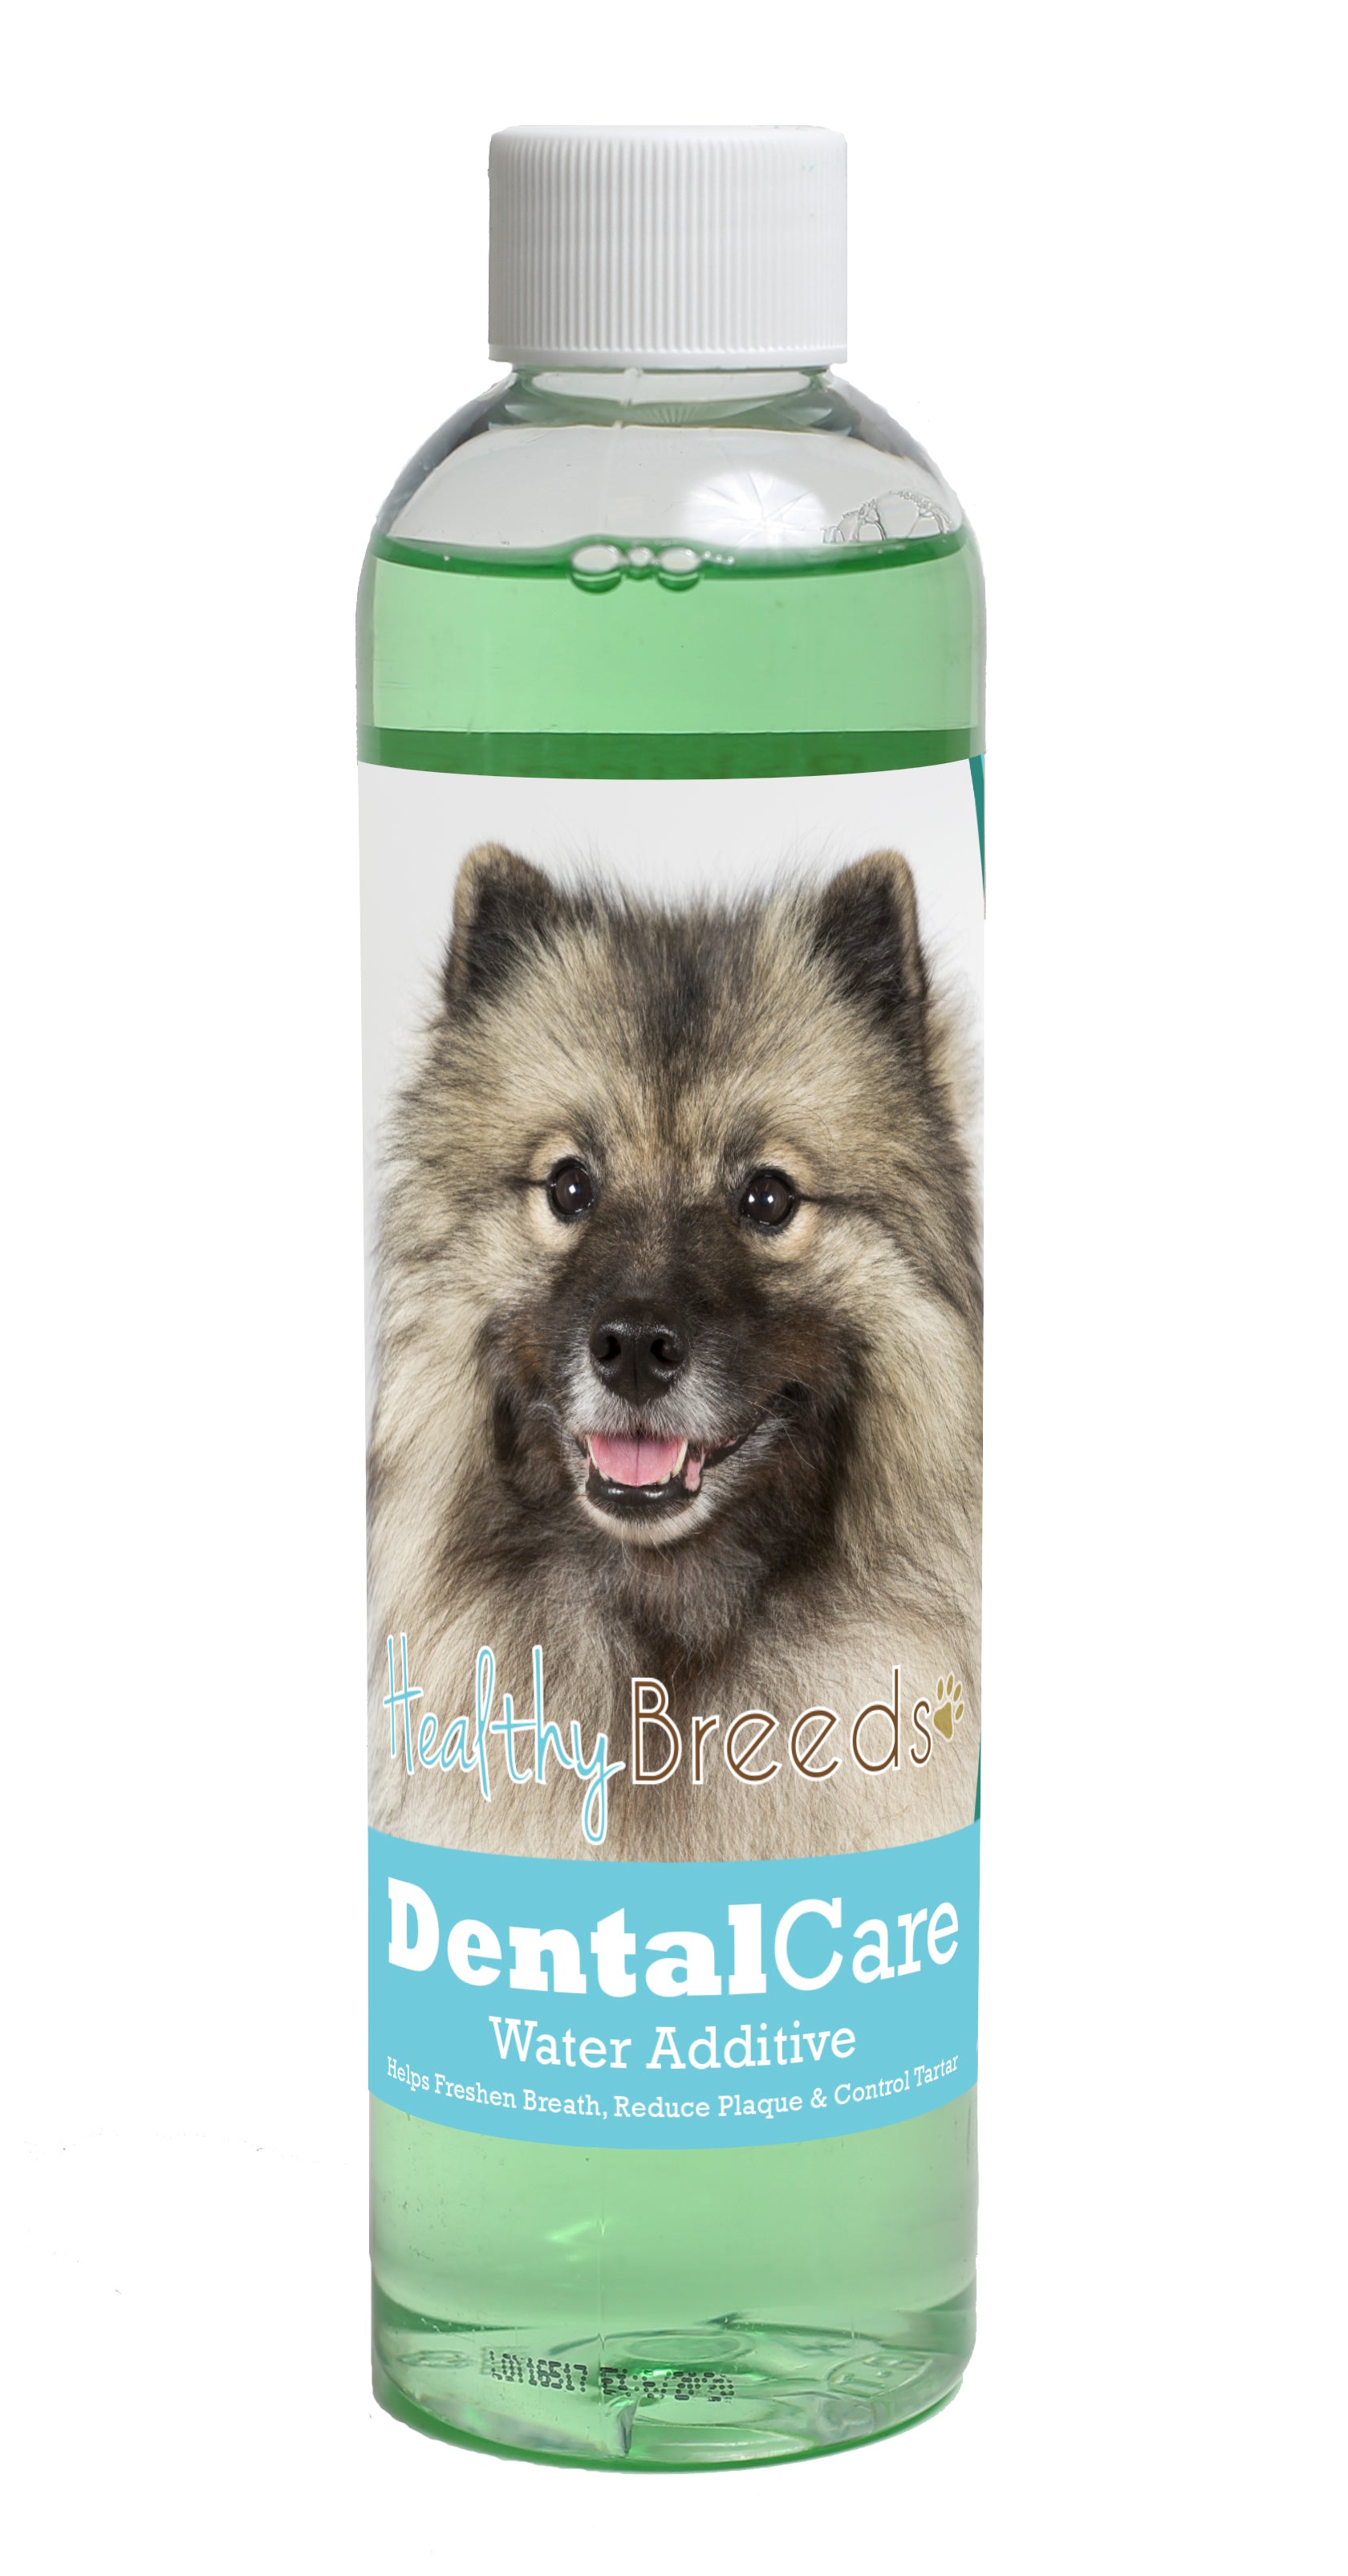 Keeshonden Dental Rinse for Dogs 8 oz